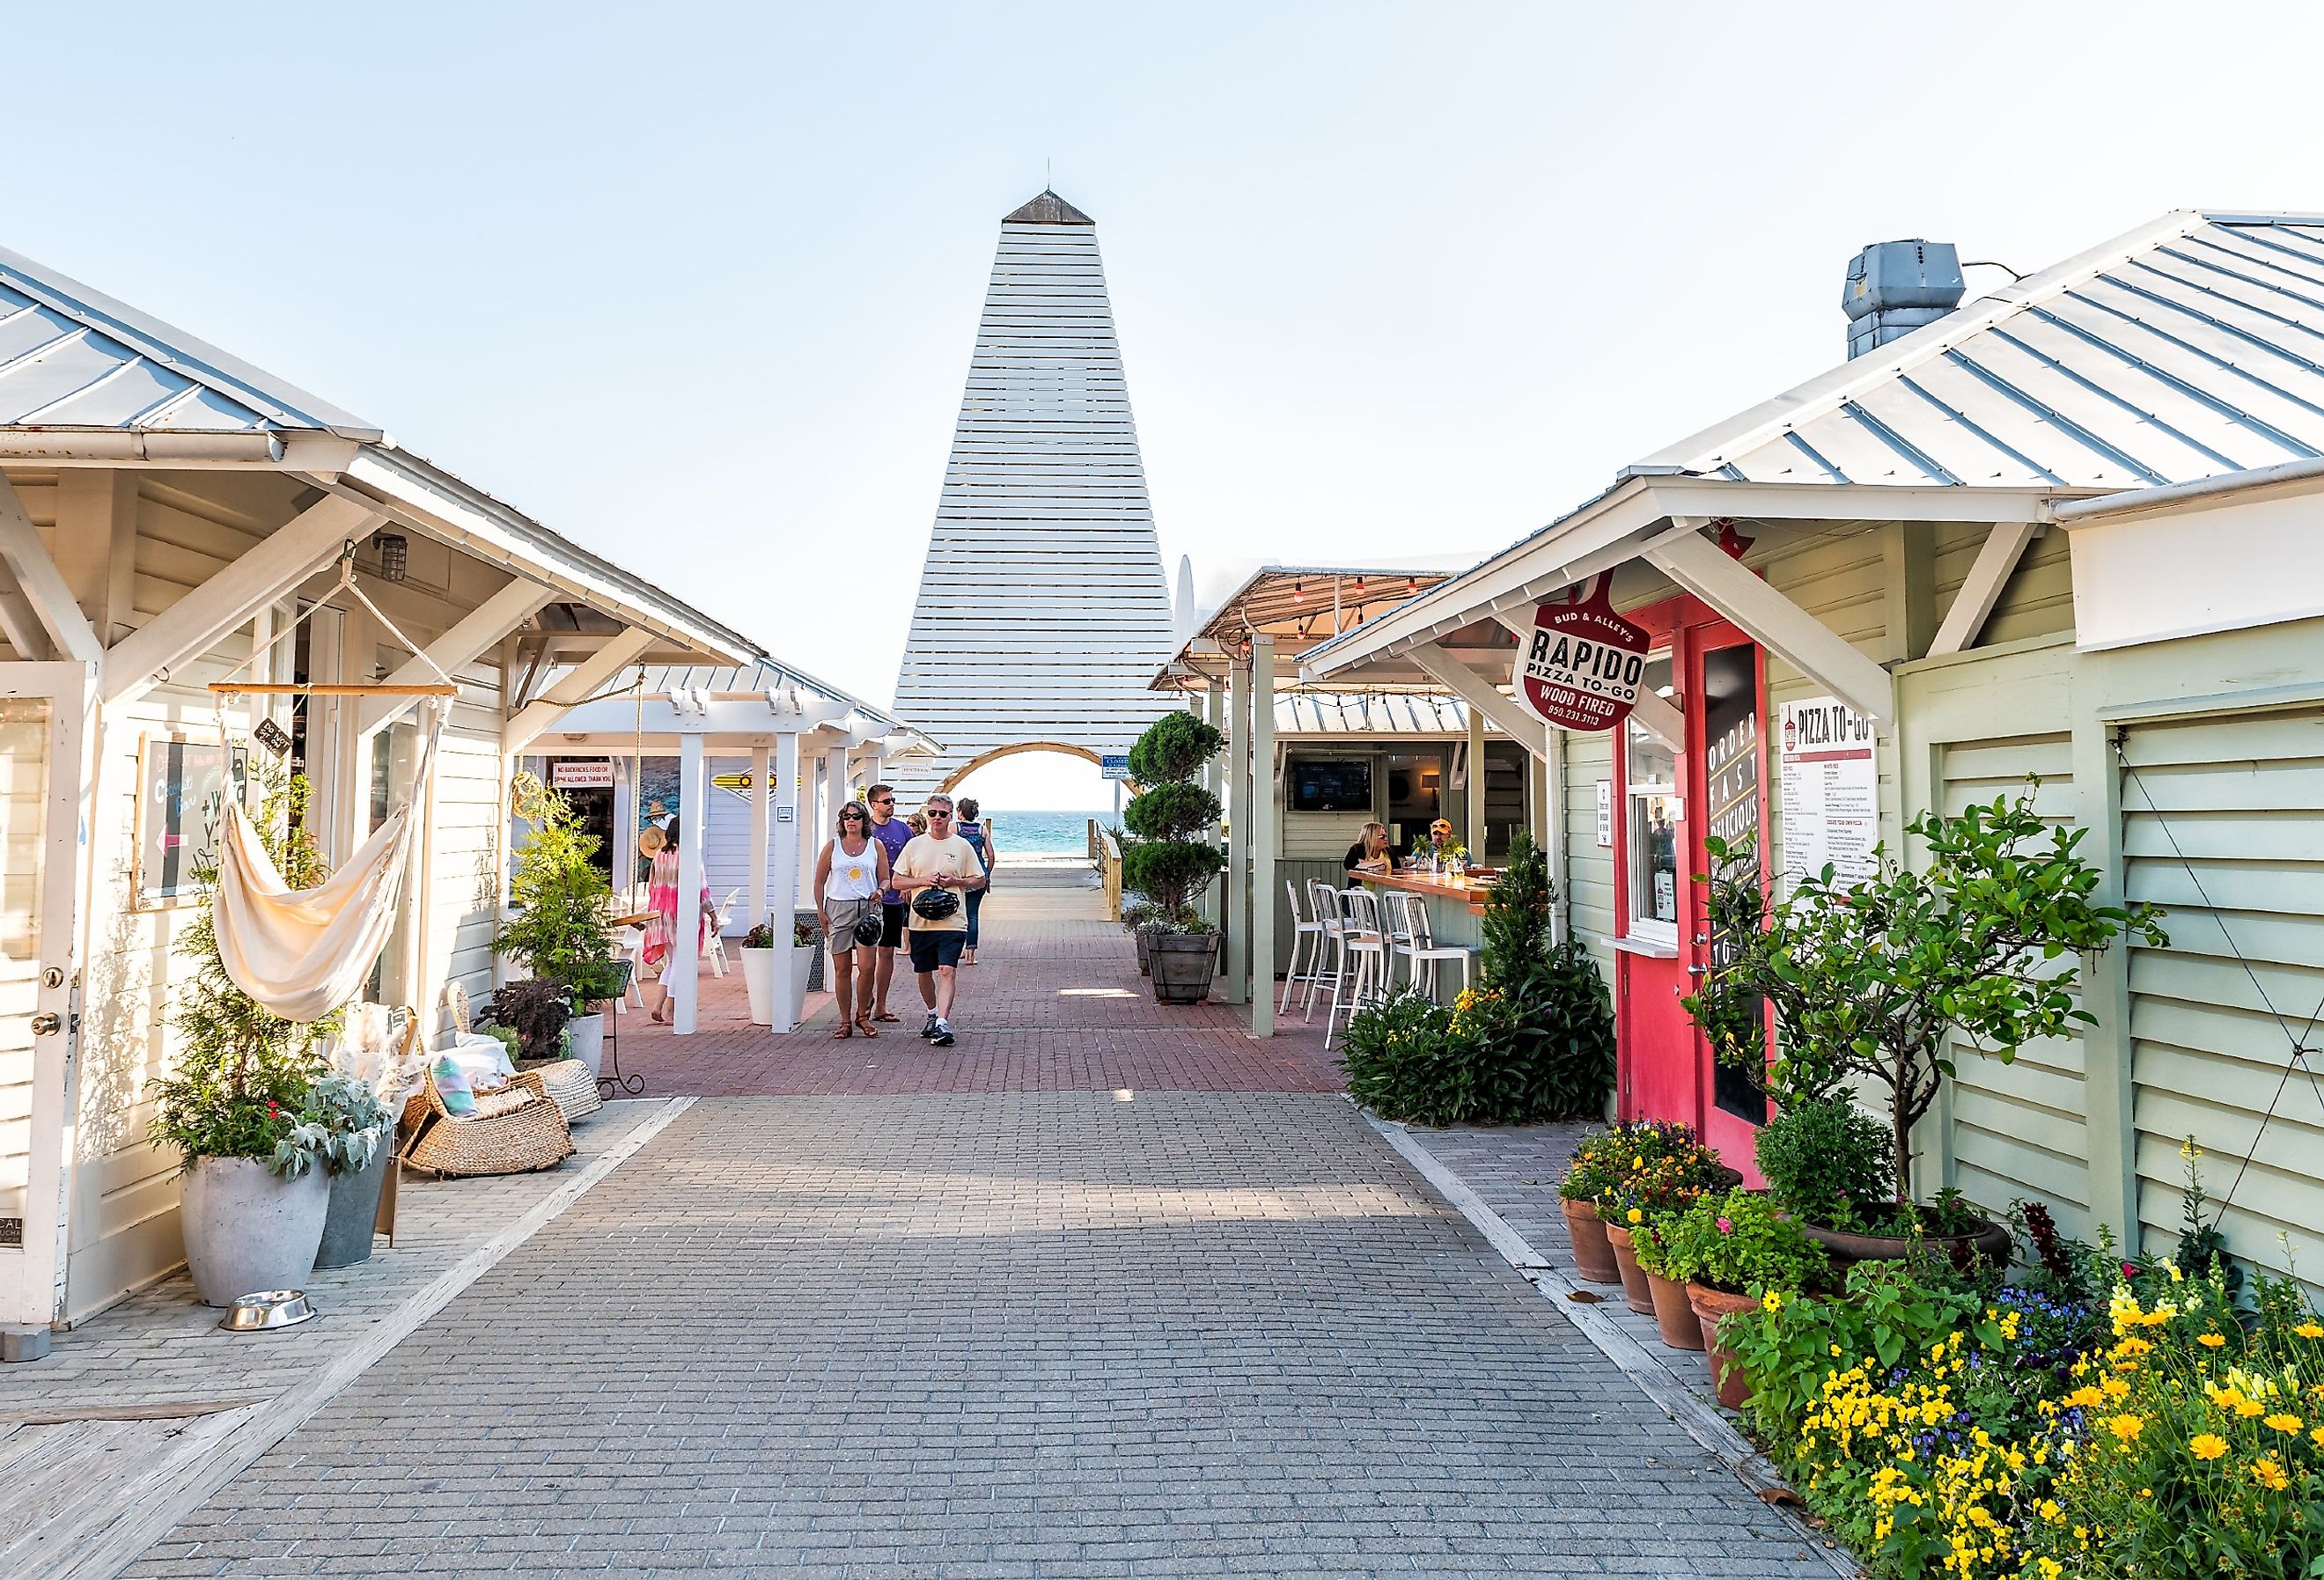 Historic square shopping area in Seaside, Florida. Image credit Kristi Blokhin via Shutterstock